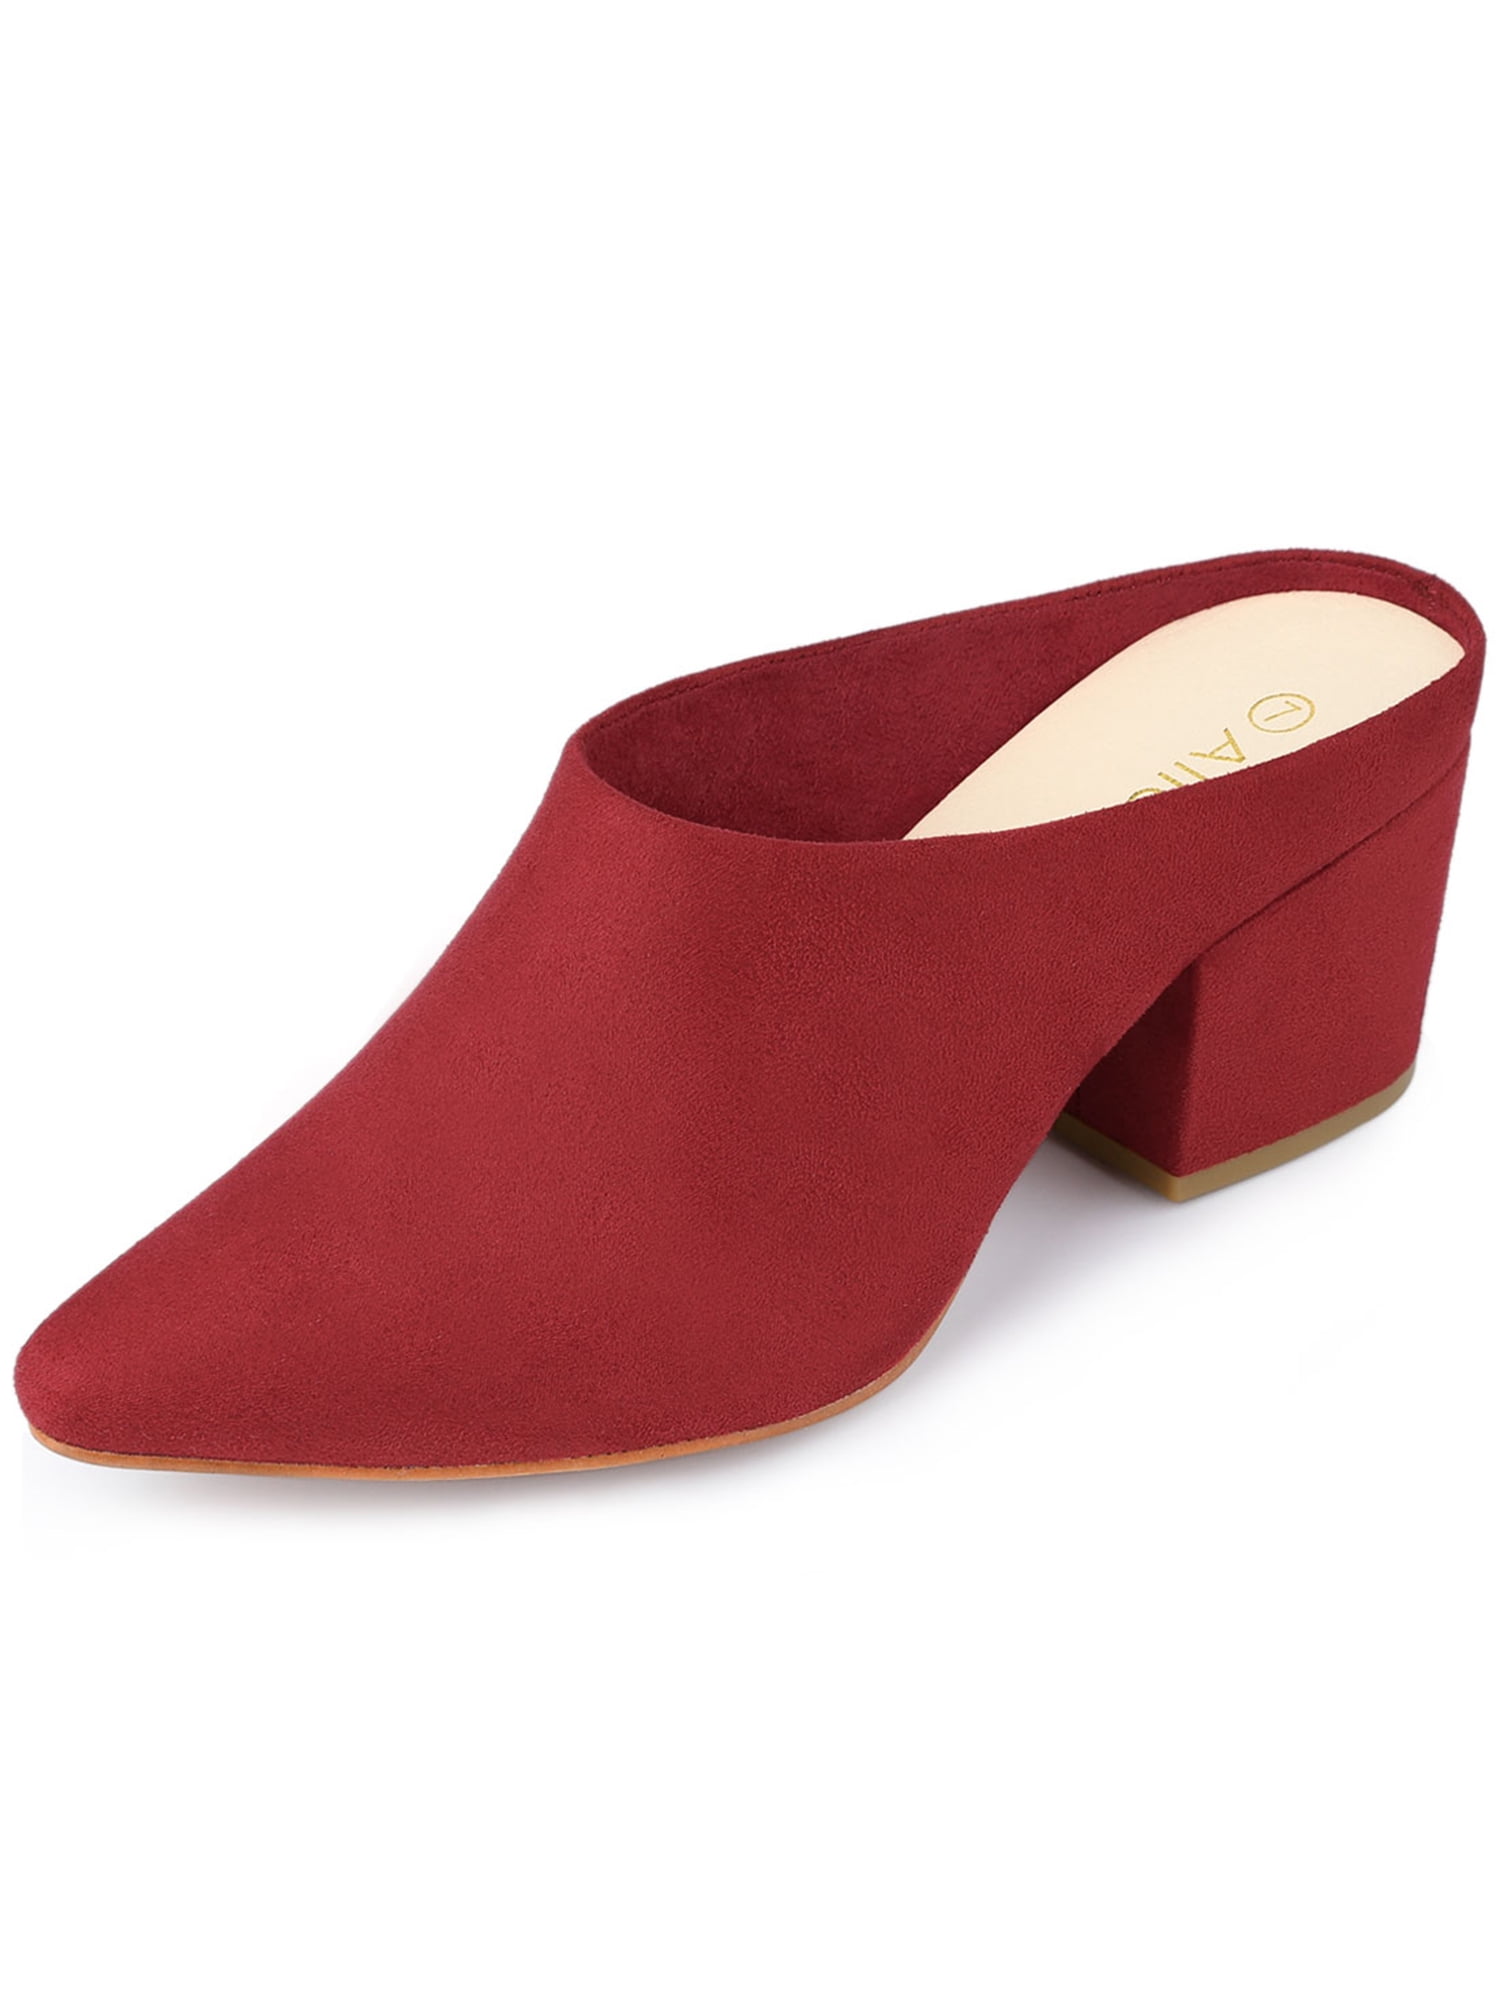 red mule women's shoes